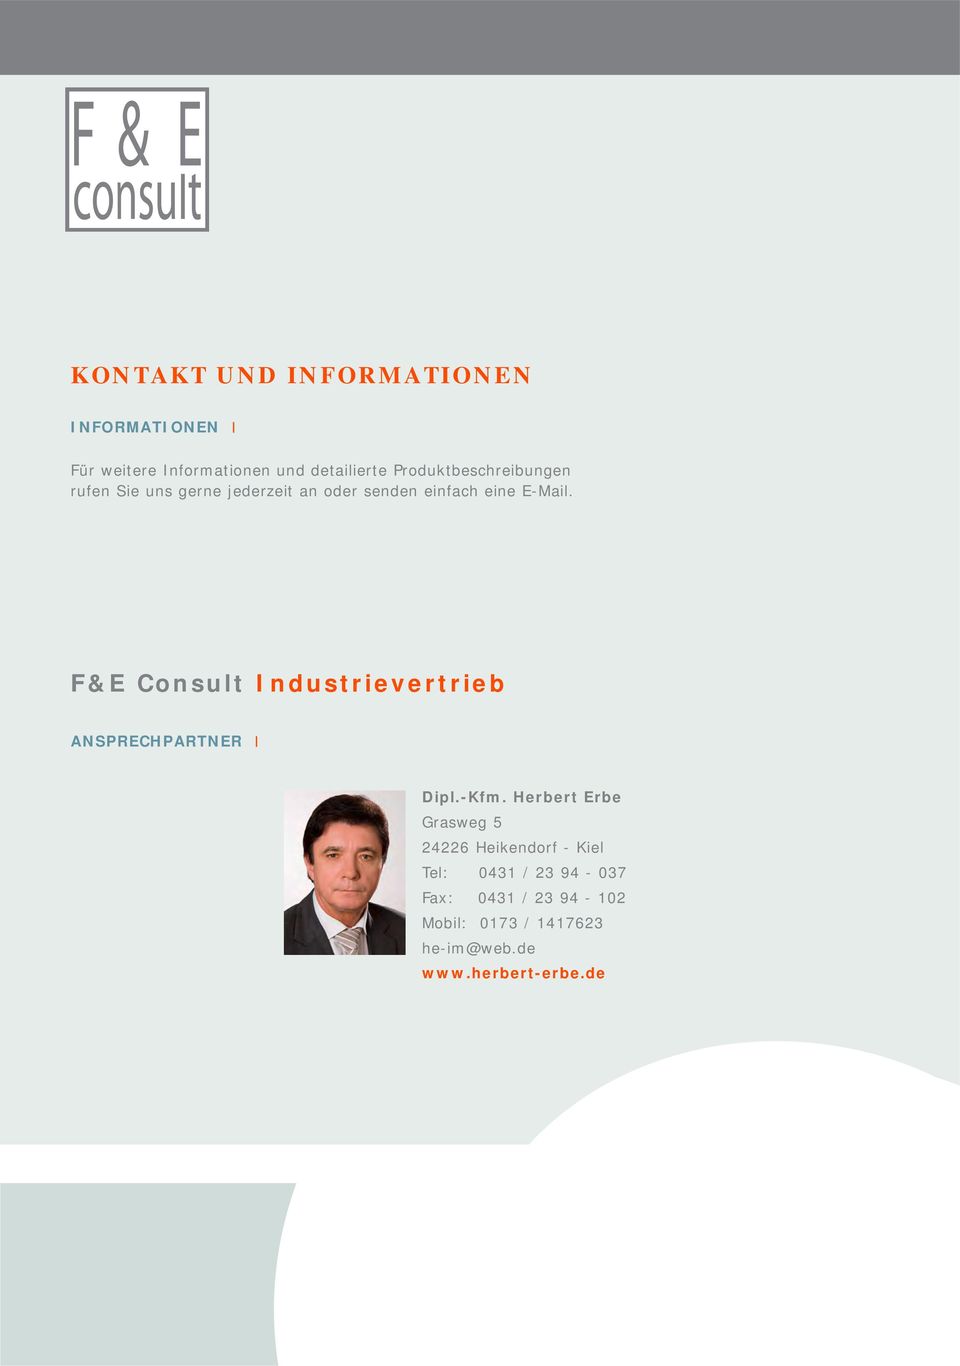 F&E Consult Industrievertrieb ANSPRECHPARTNER Dipl.-Kfm.